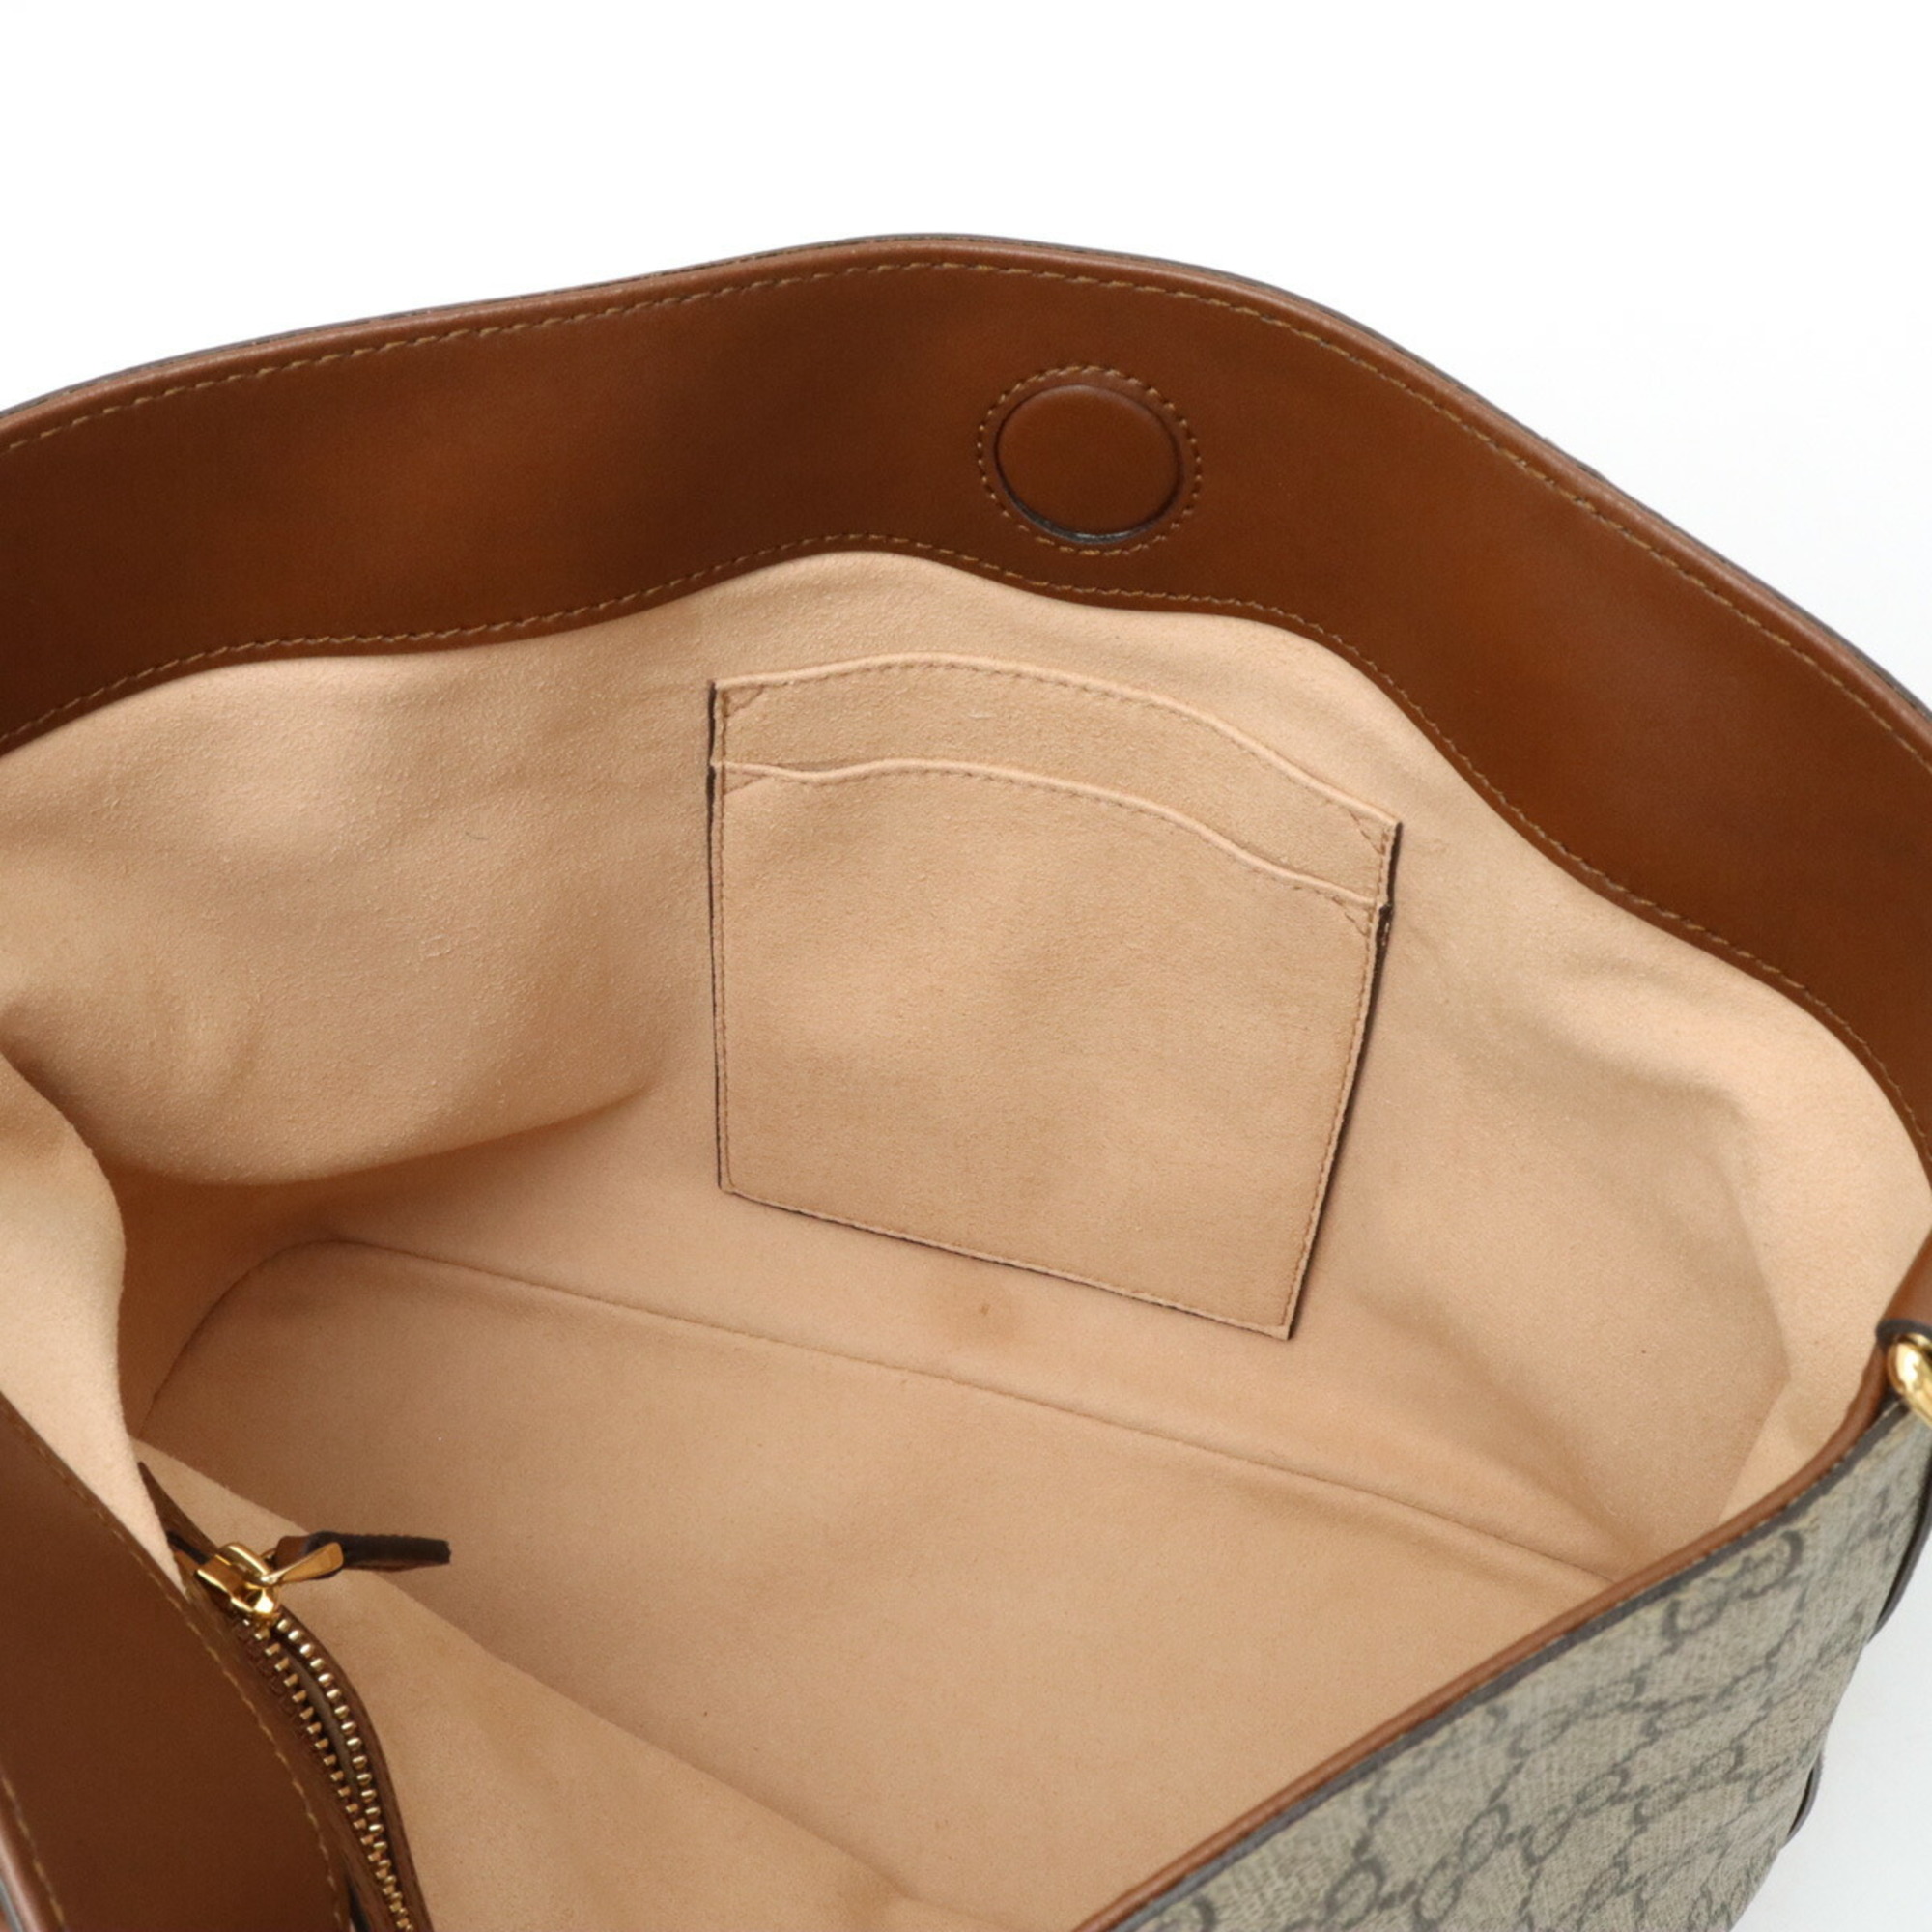 GUCCI GG Supreme handbag tote bag PVC leather beige brown 473887